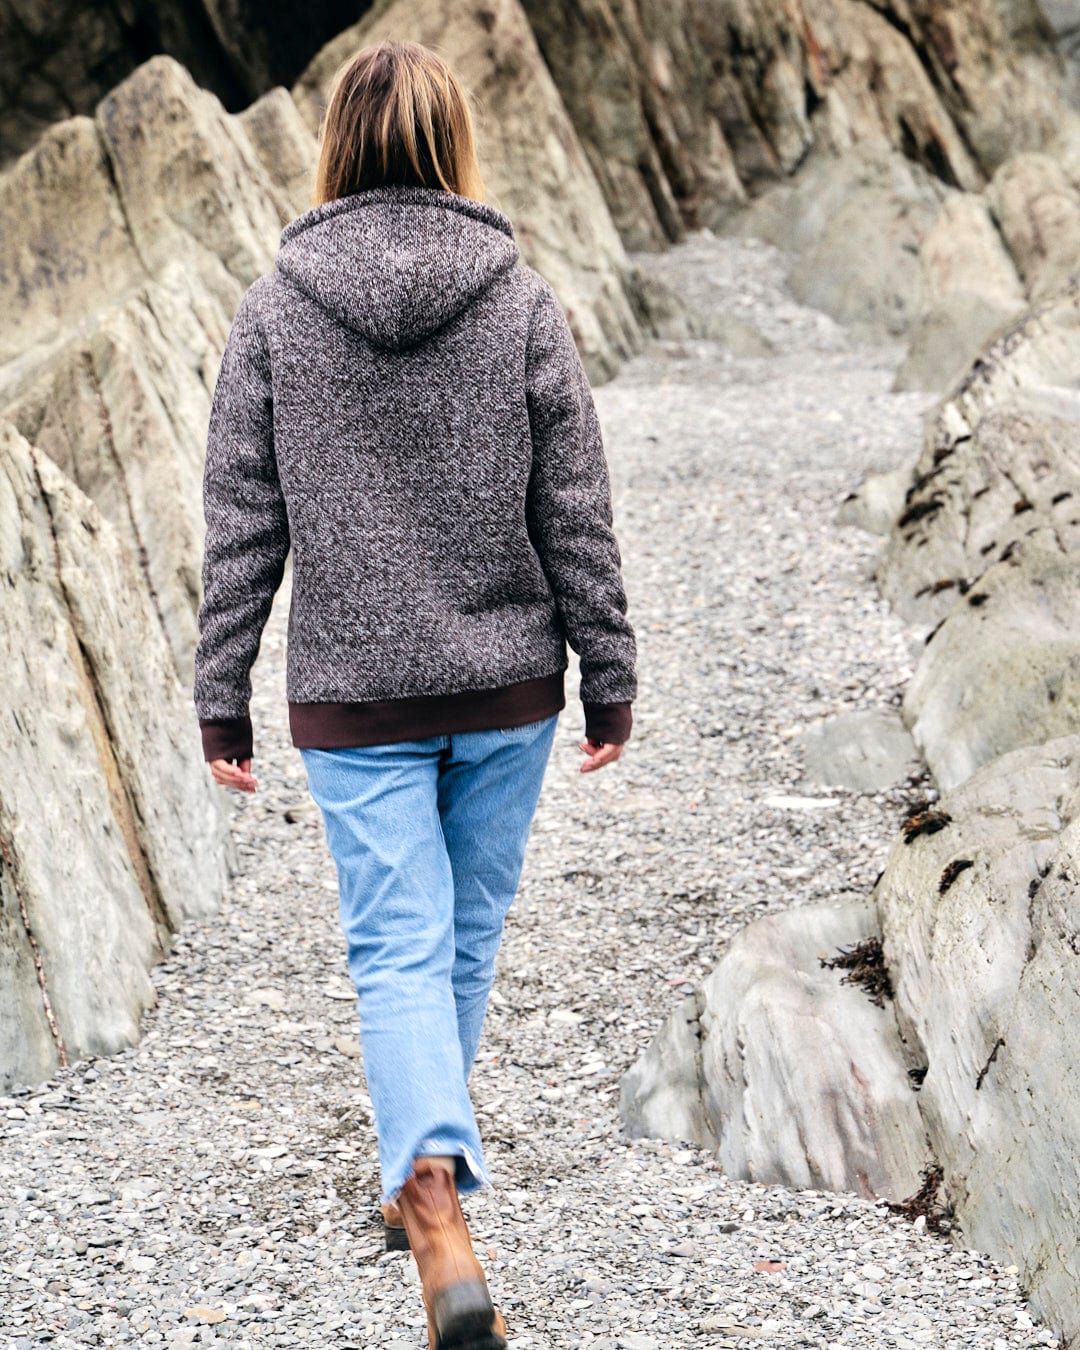 A woman wearing a textured knit Saltrock Sofie Hoodie, walking on a gravel path near rocks.